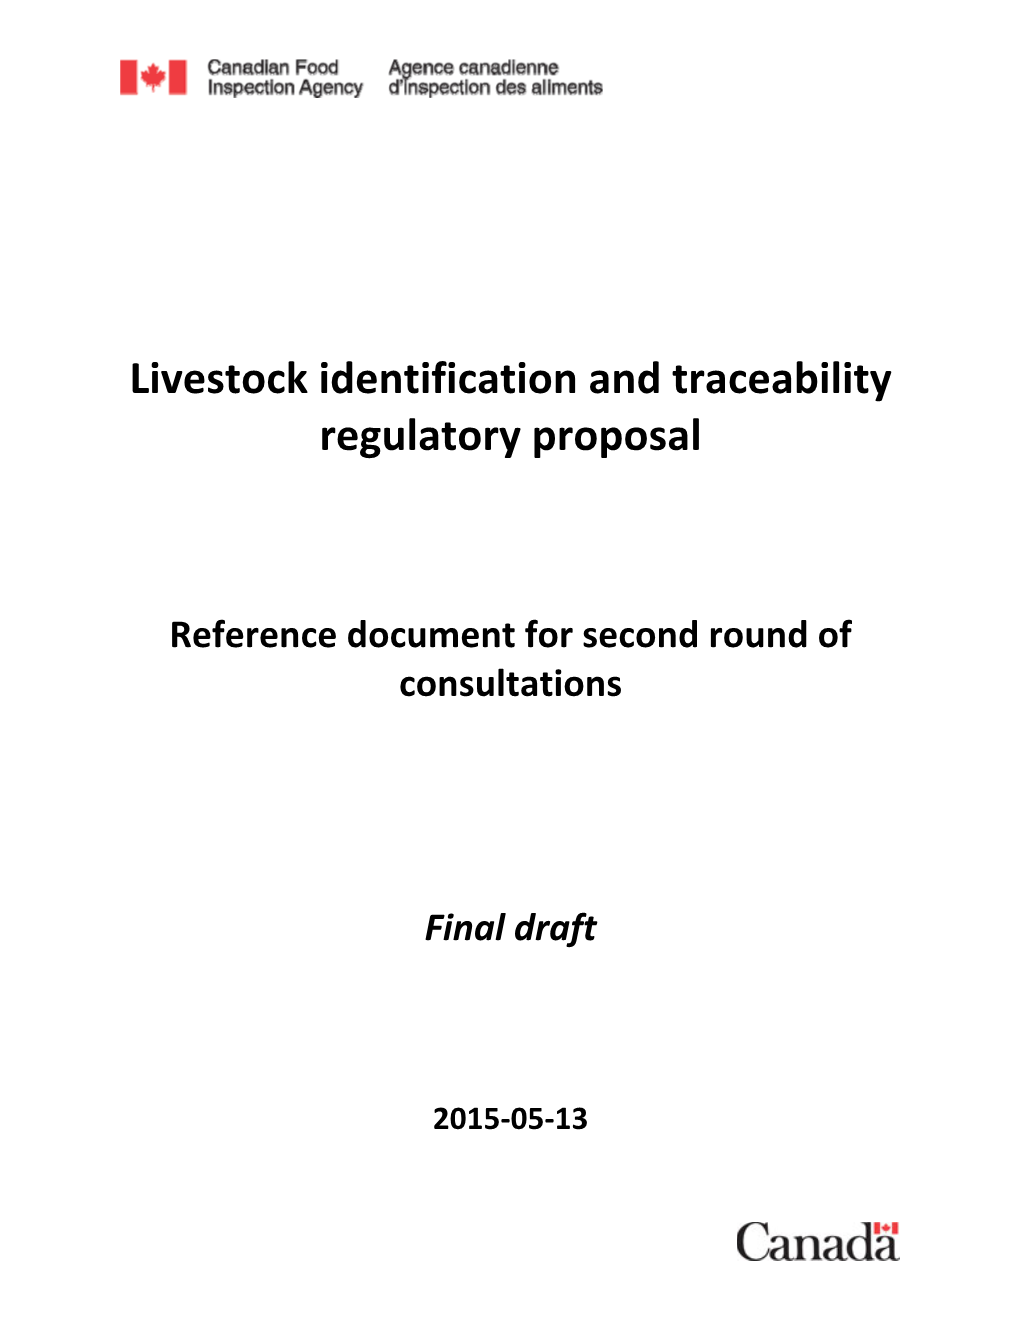 Livestock Identification and Traceability Regulatory Proposal